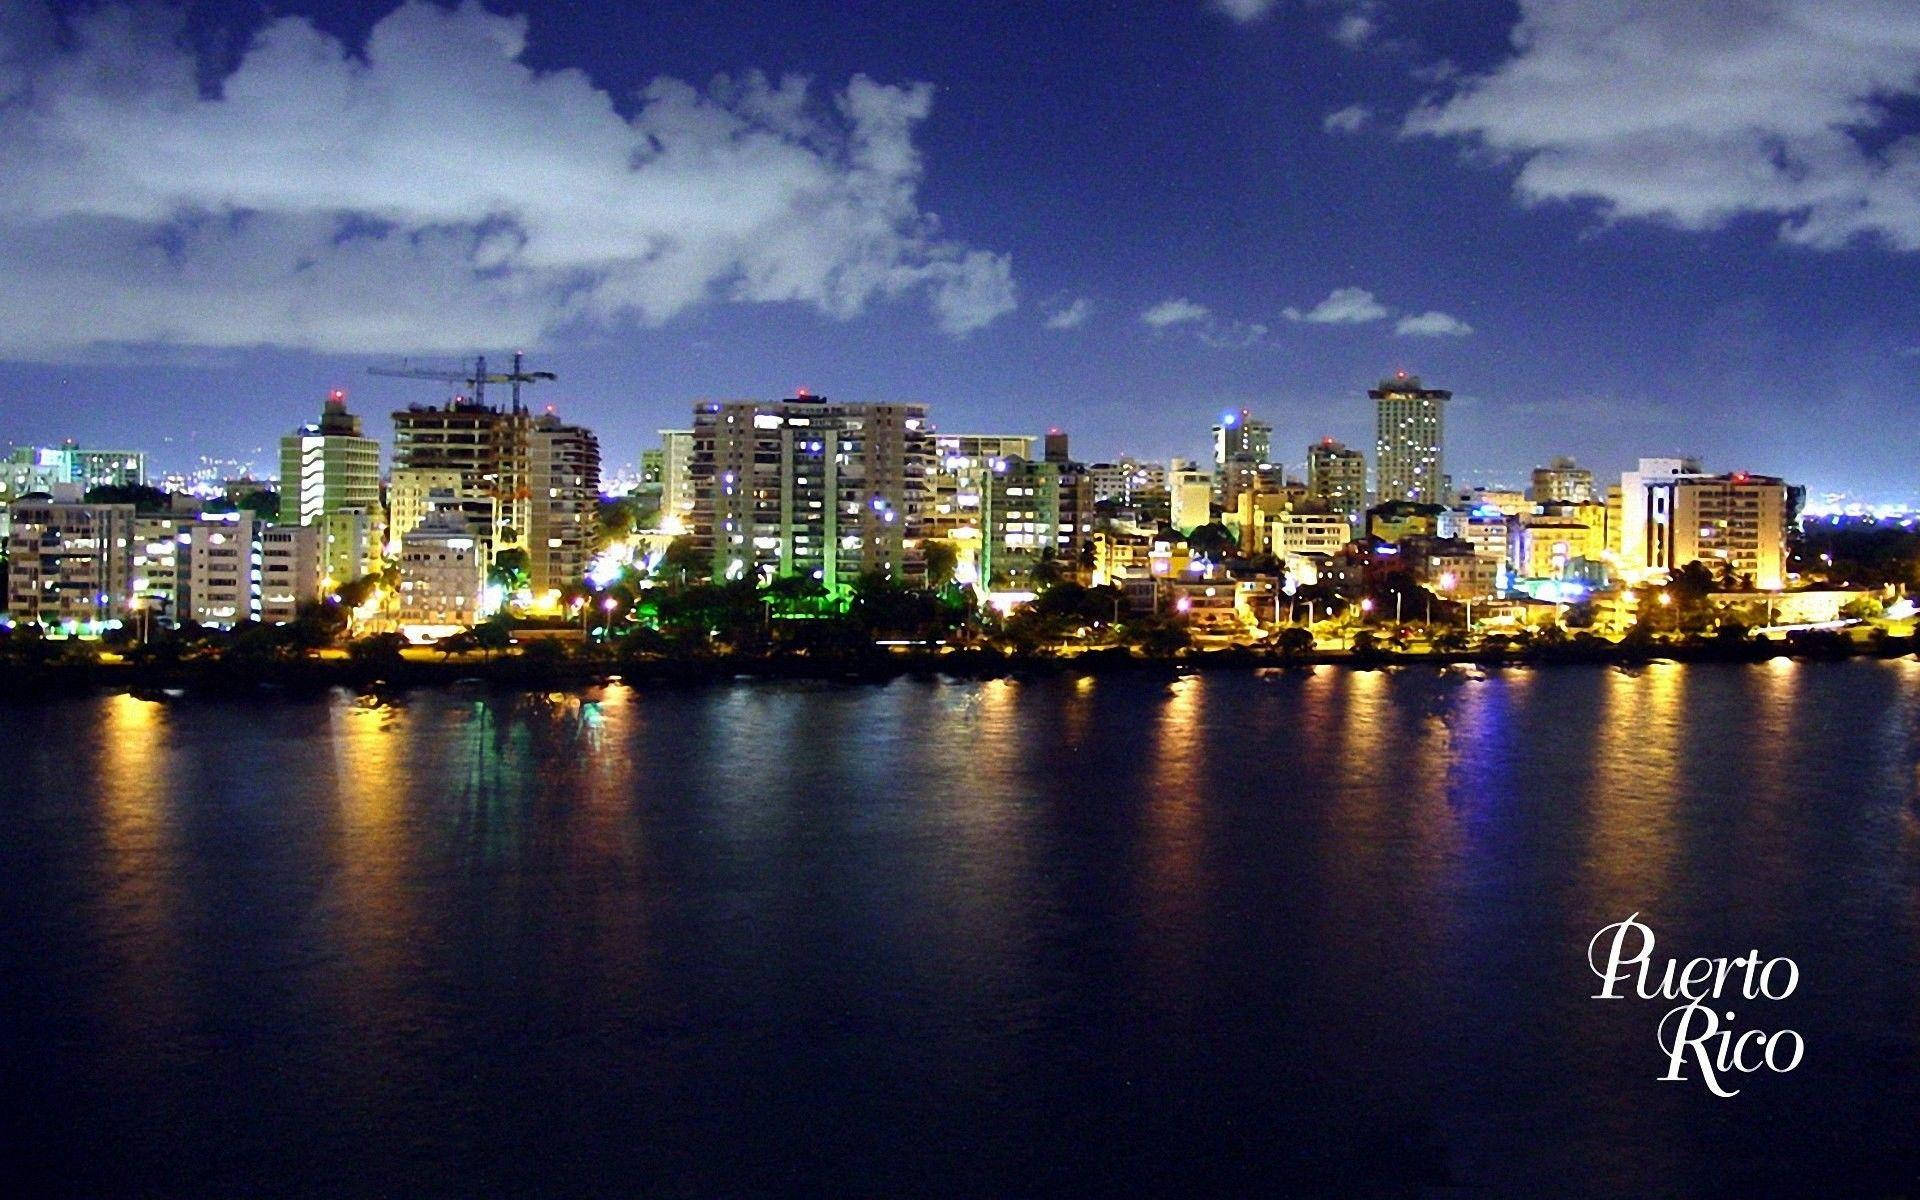 Puerto Rico Night City Life Background